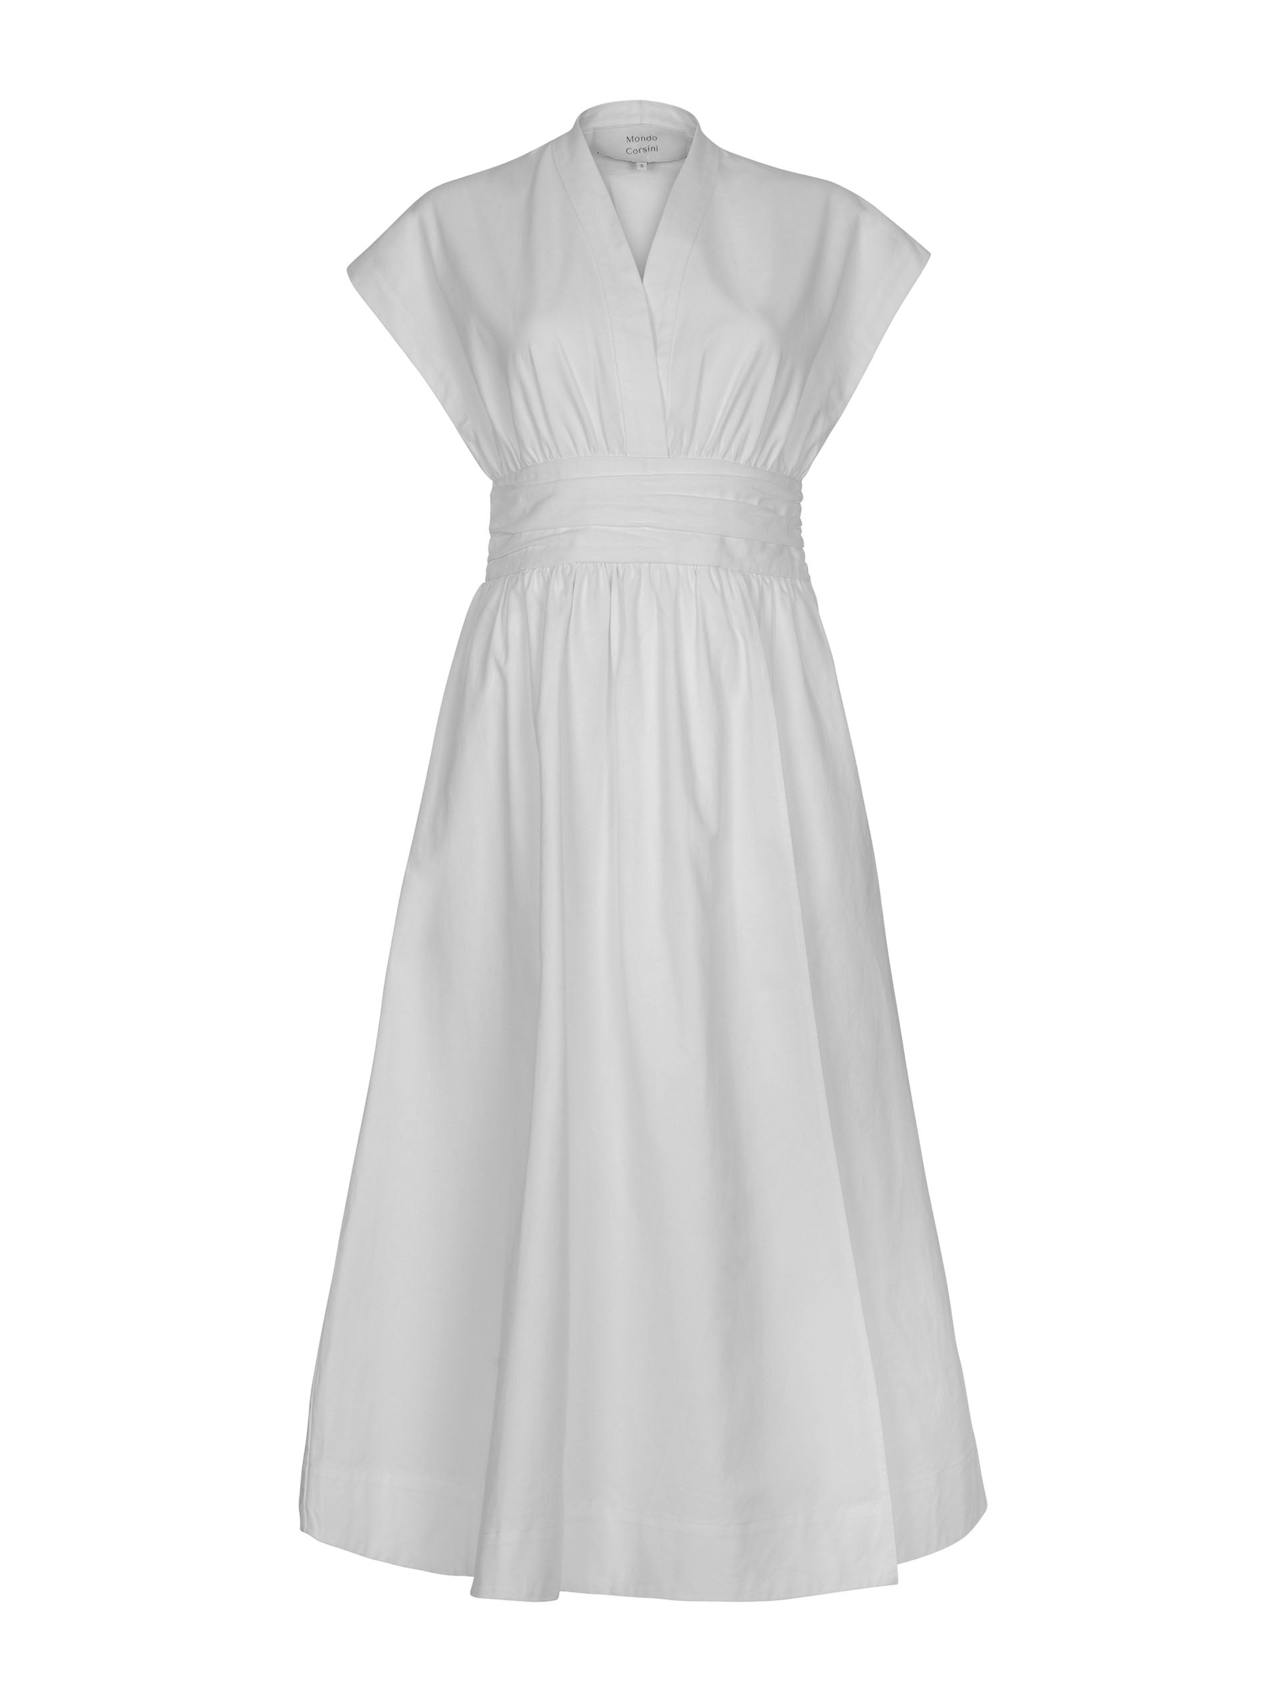 Georgia pearl cotton twill dress